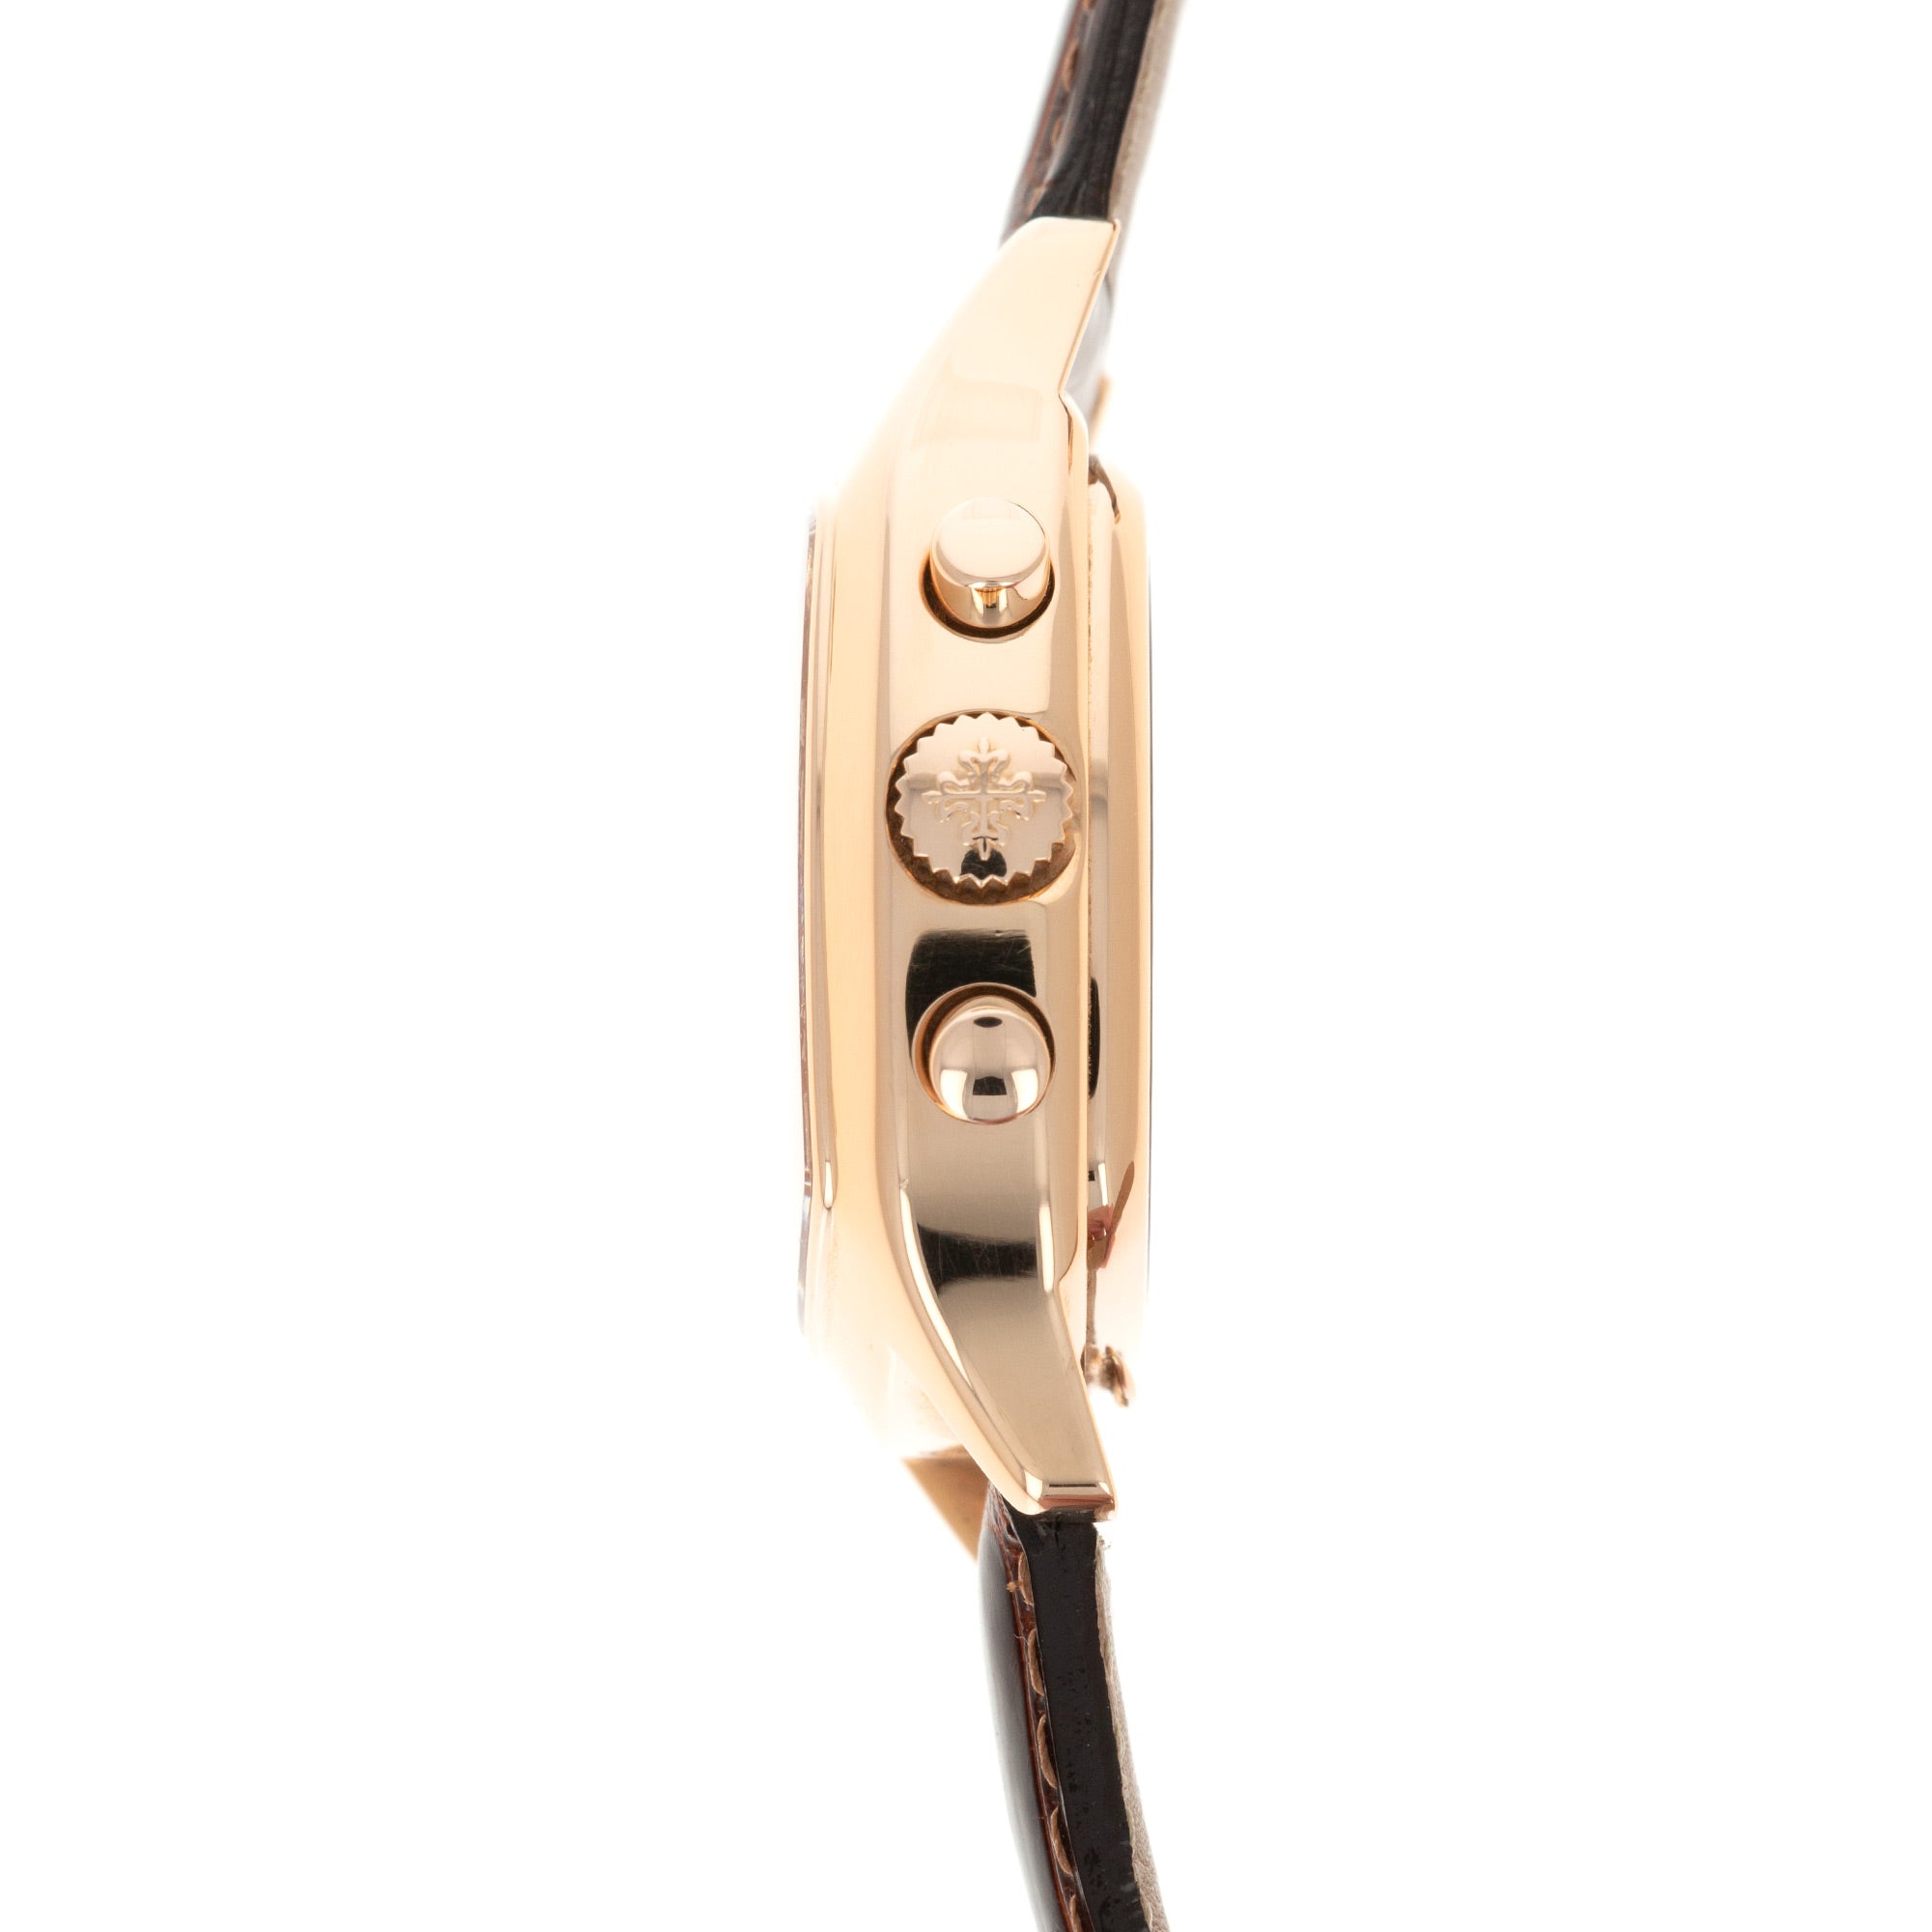 Patek Philippe - Patek Philippe Rose Gold Perpetual Calendar Chrono Watch Ref. 5020 - The Keystone Watches